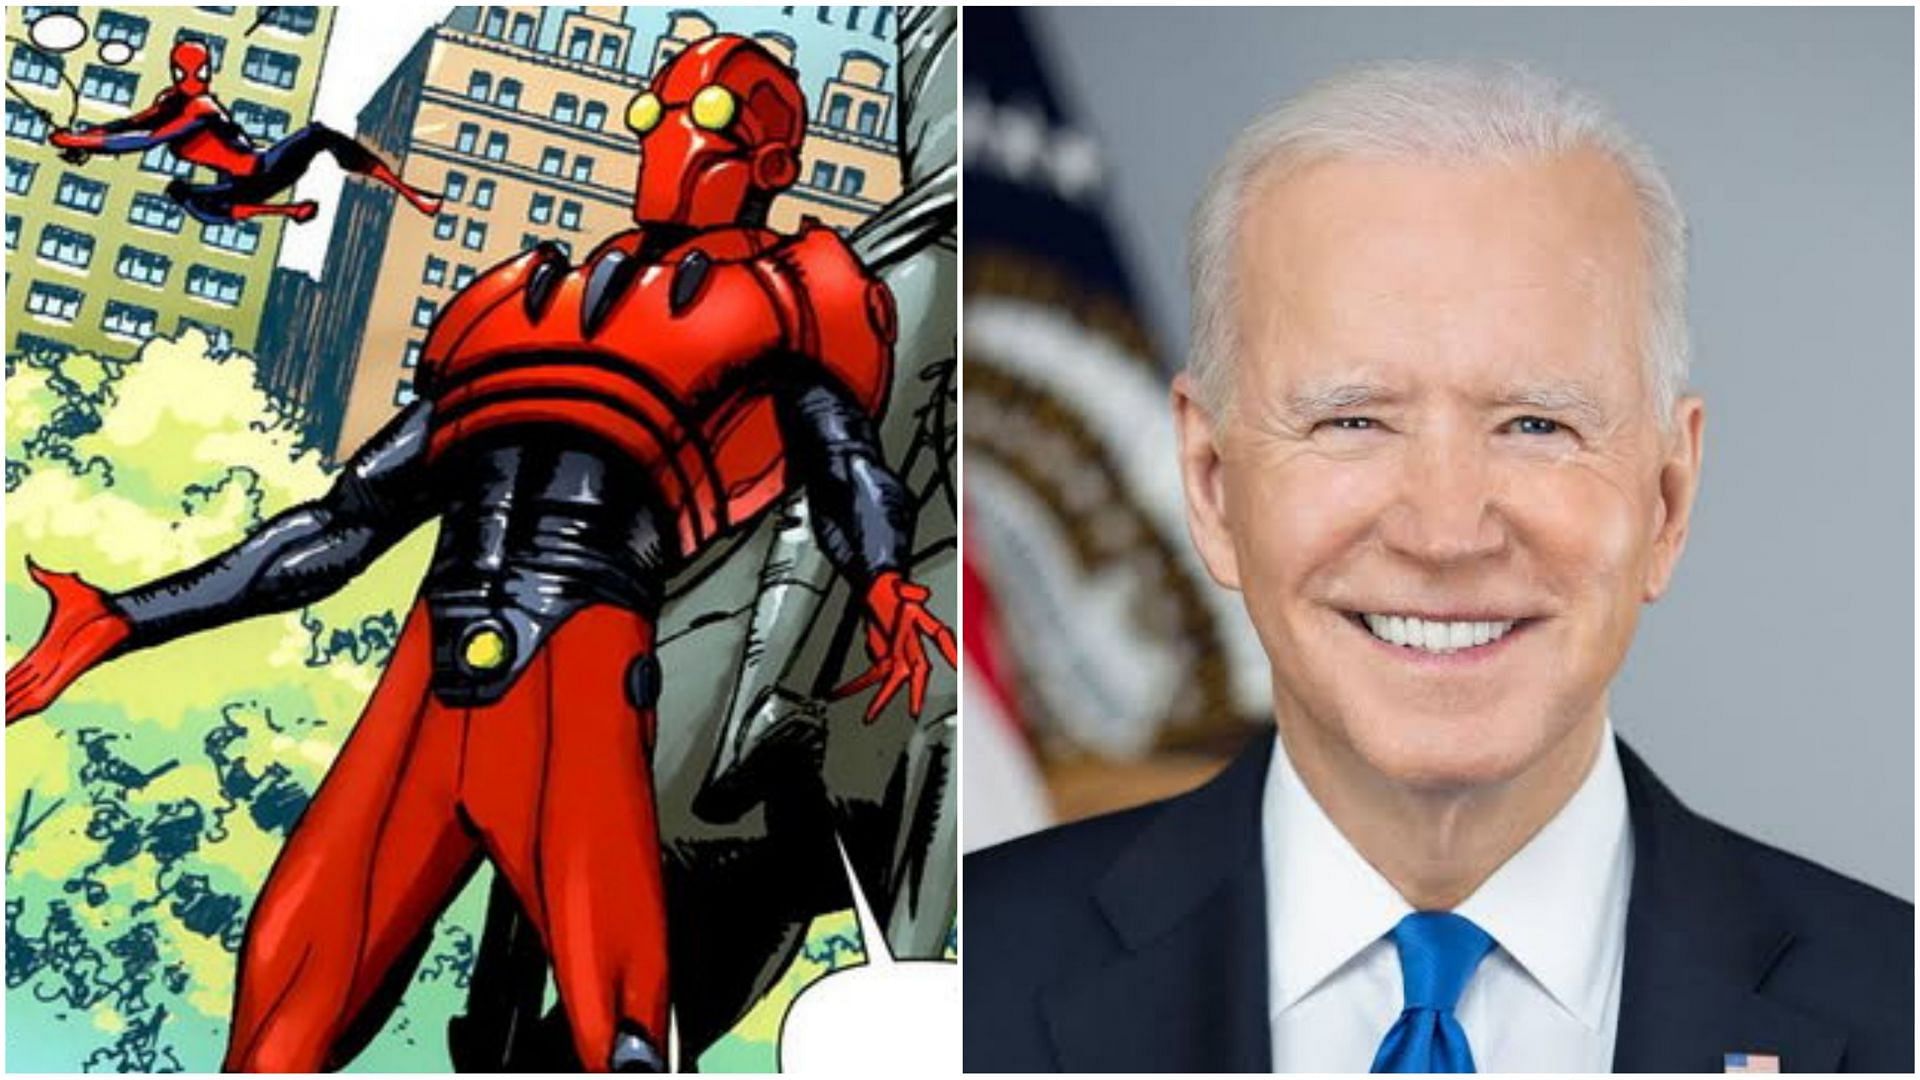 Spectrum and President Biden (Image via Marvel Comics and Twitter)